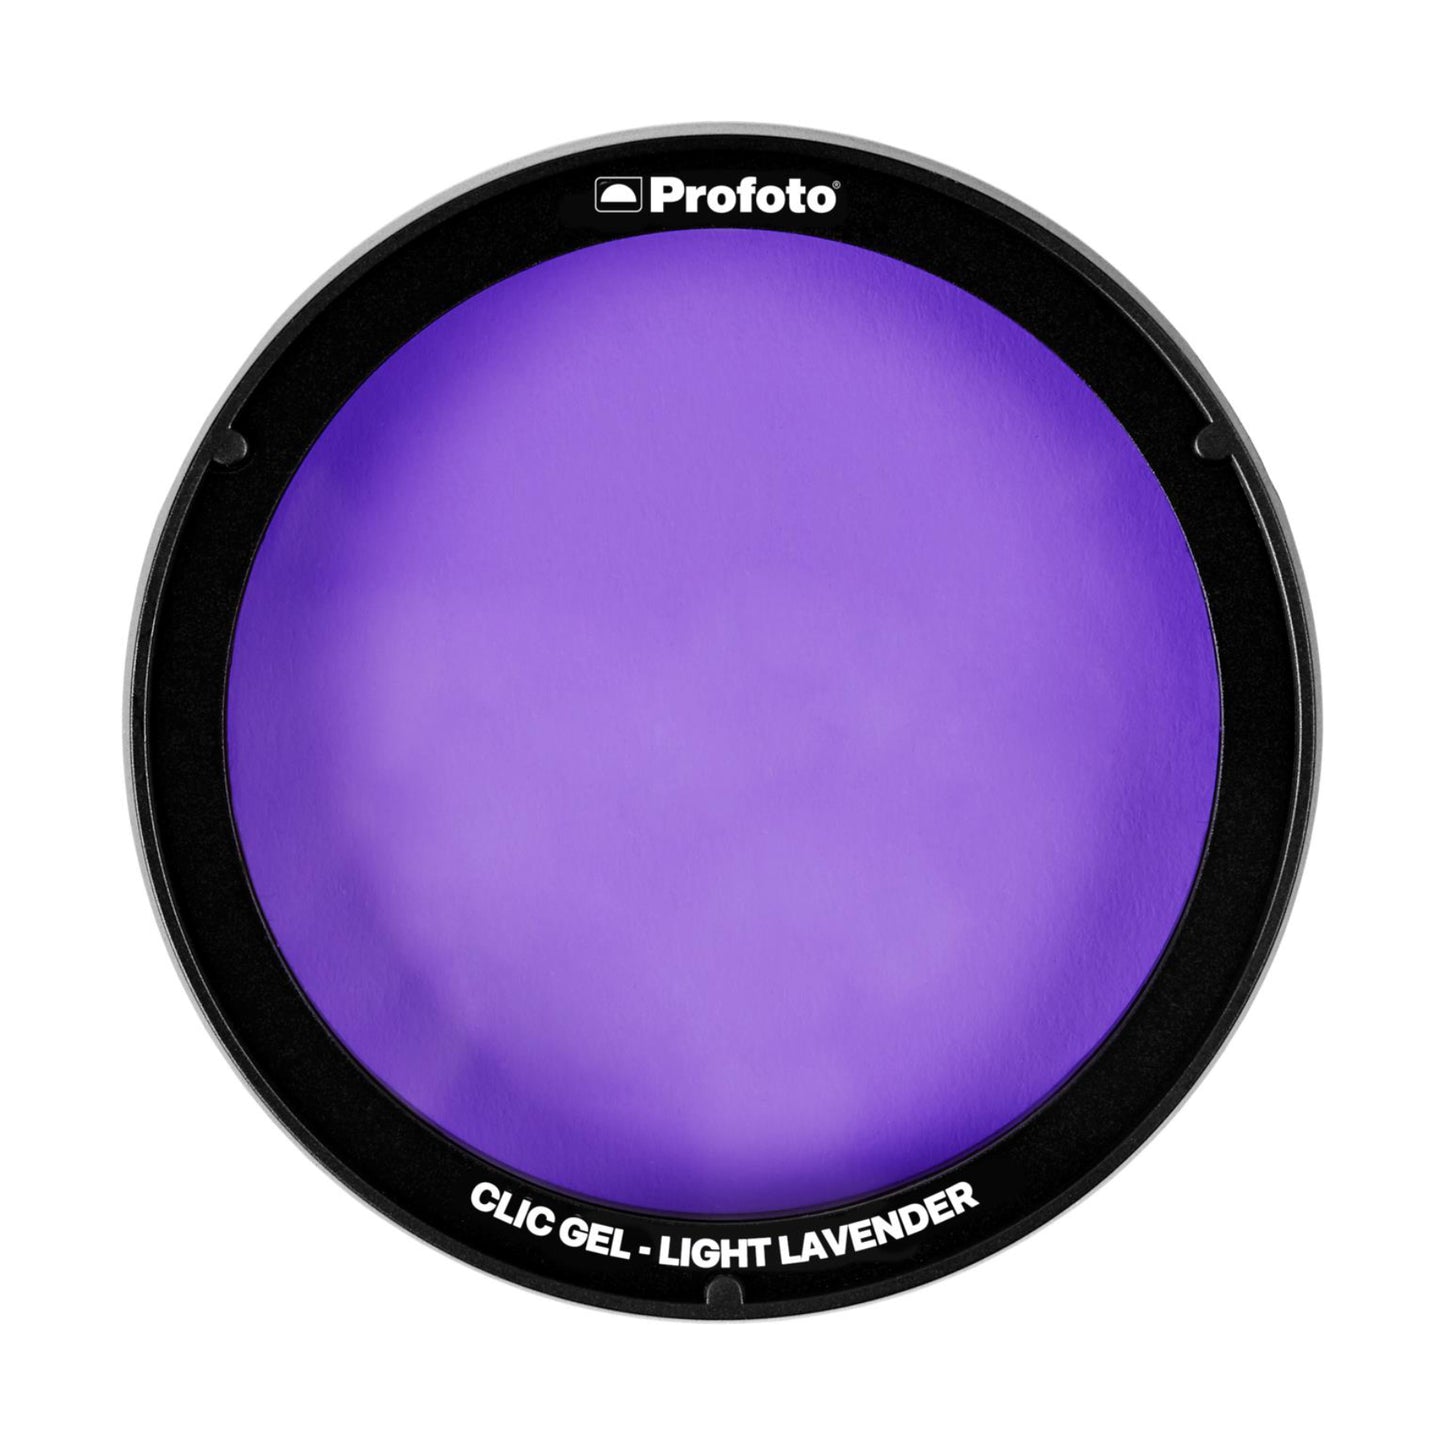 Hire Profoto Clic Gel for A10 Flash - Light Lavender at Topic Rentals